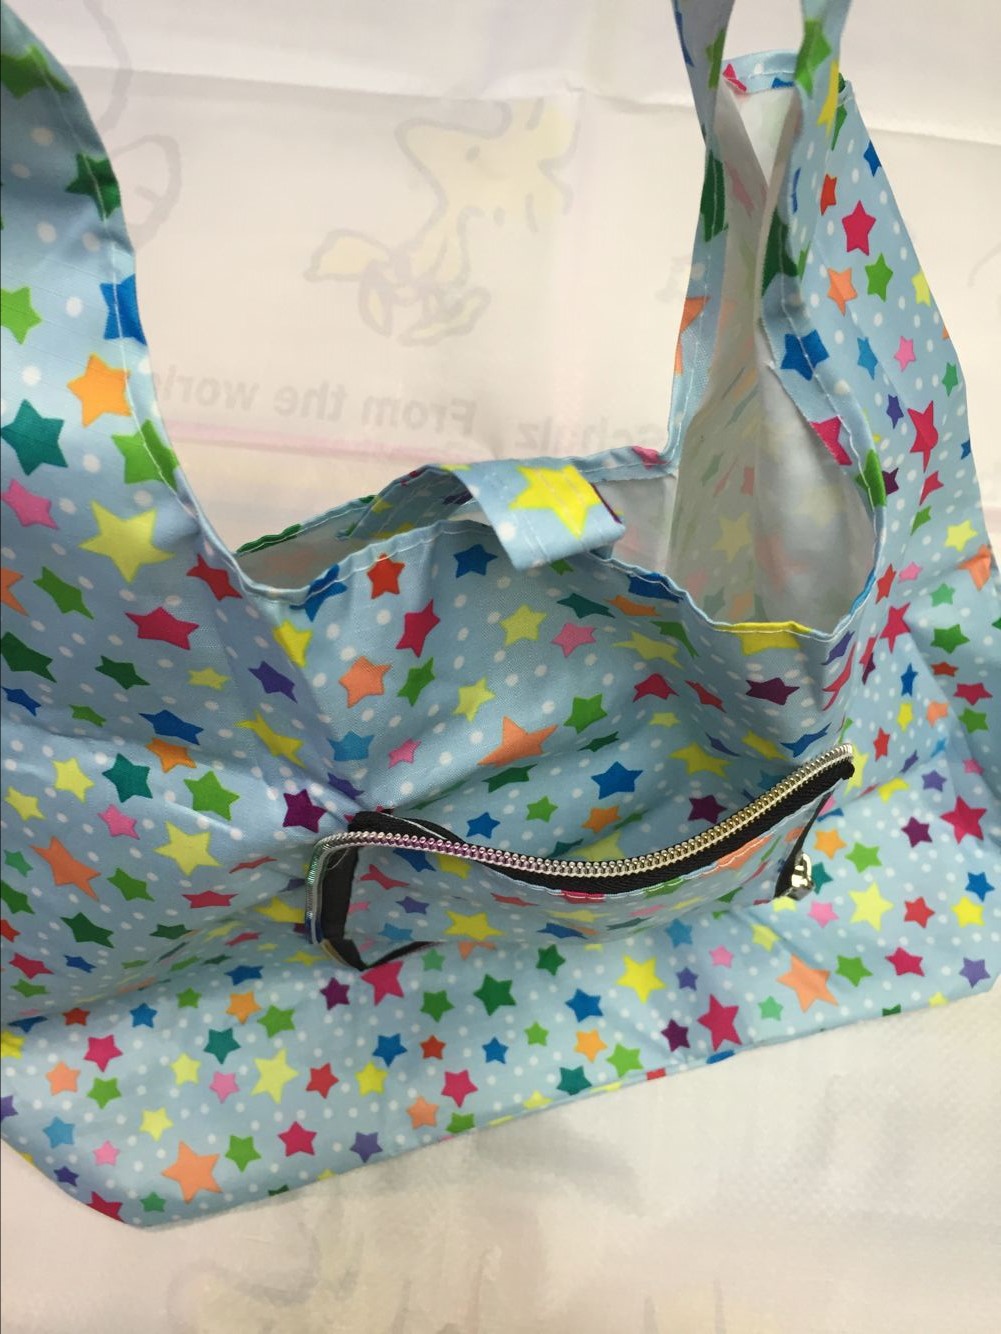 Waterproof zipper environmental protection bag7